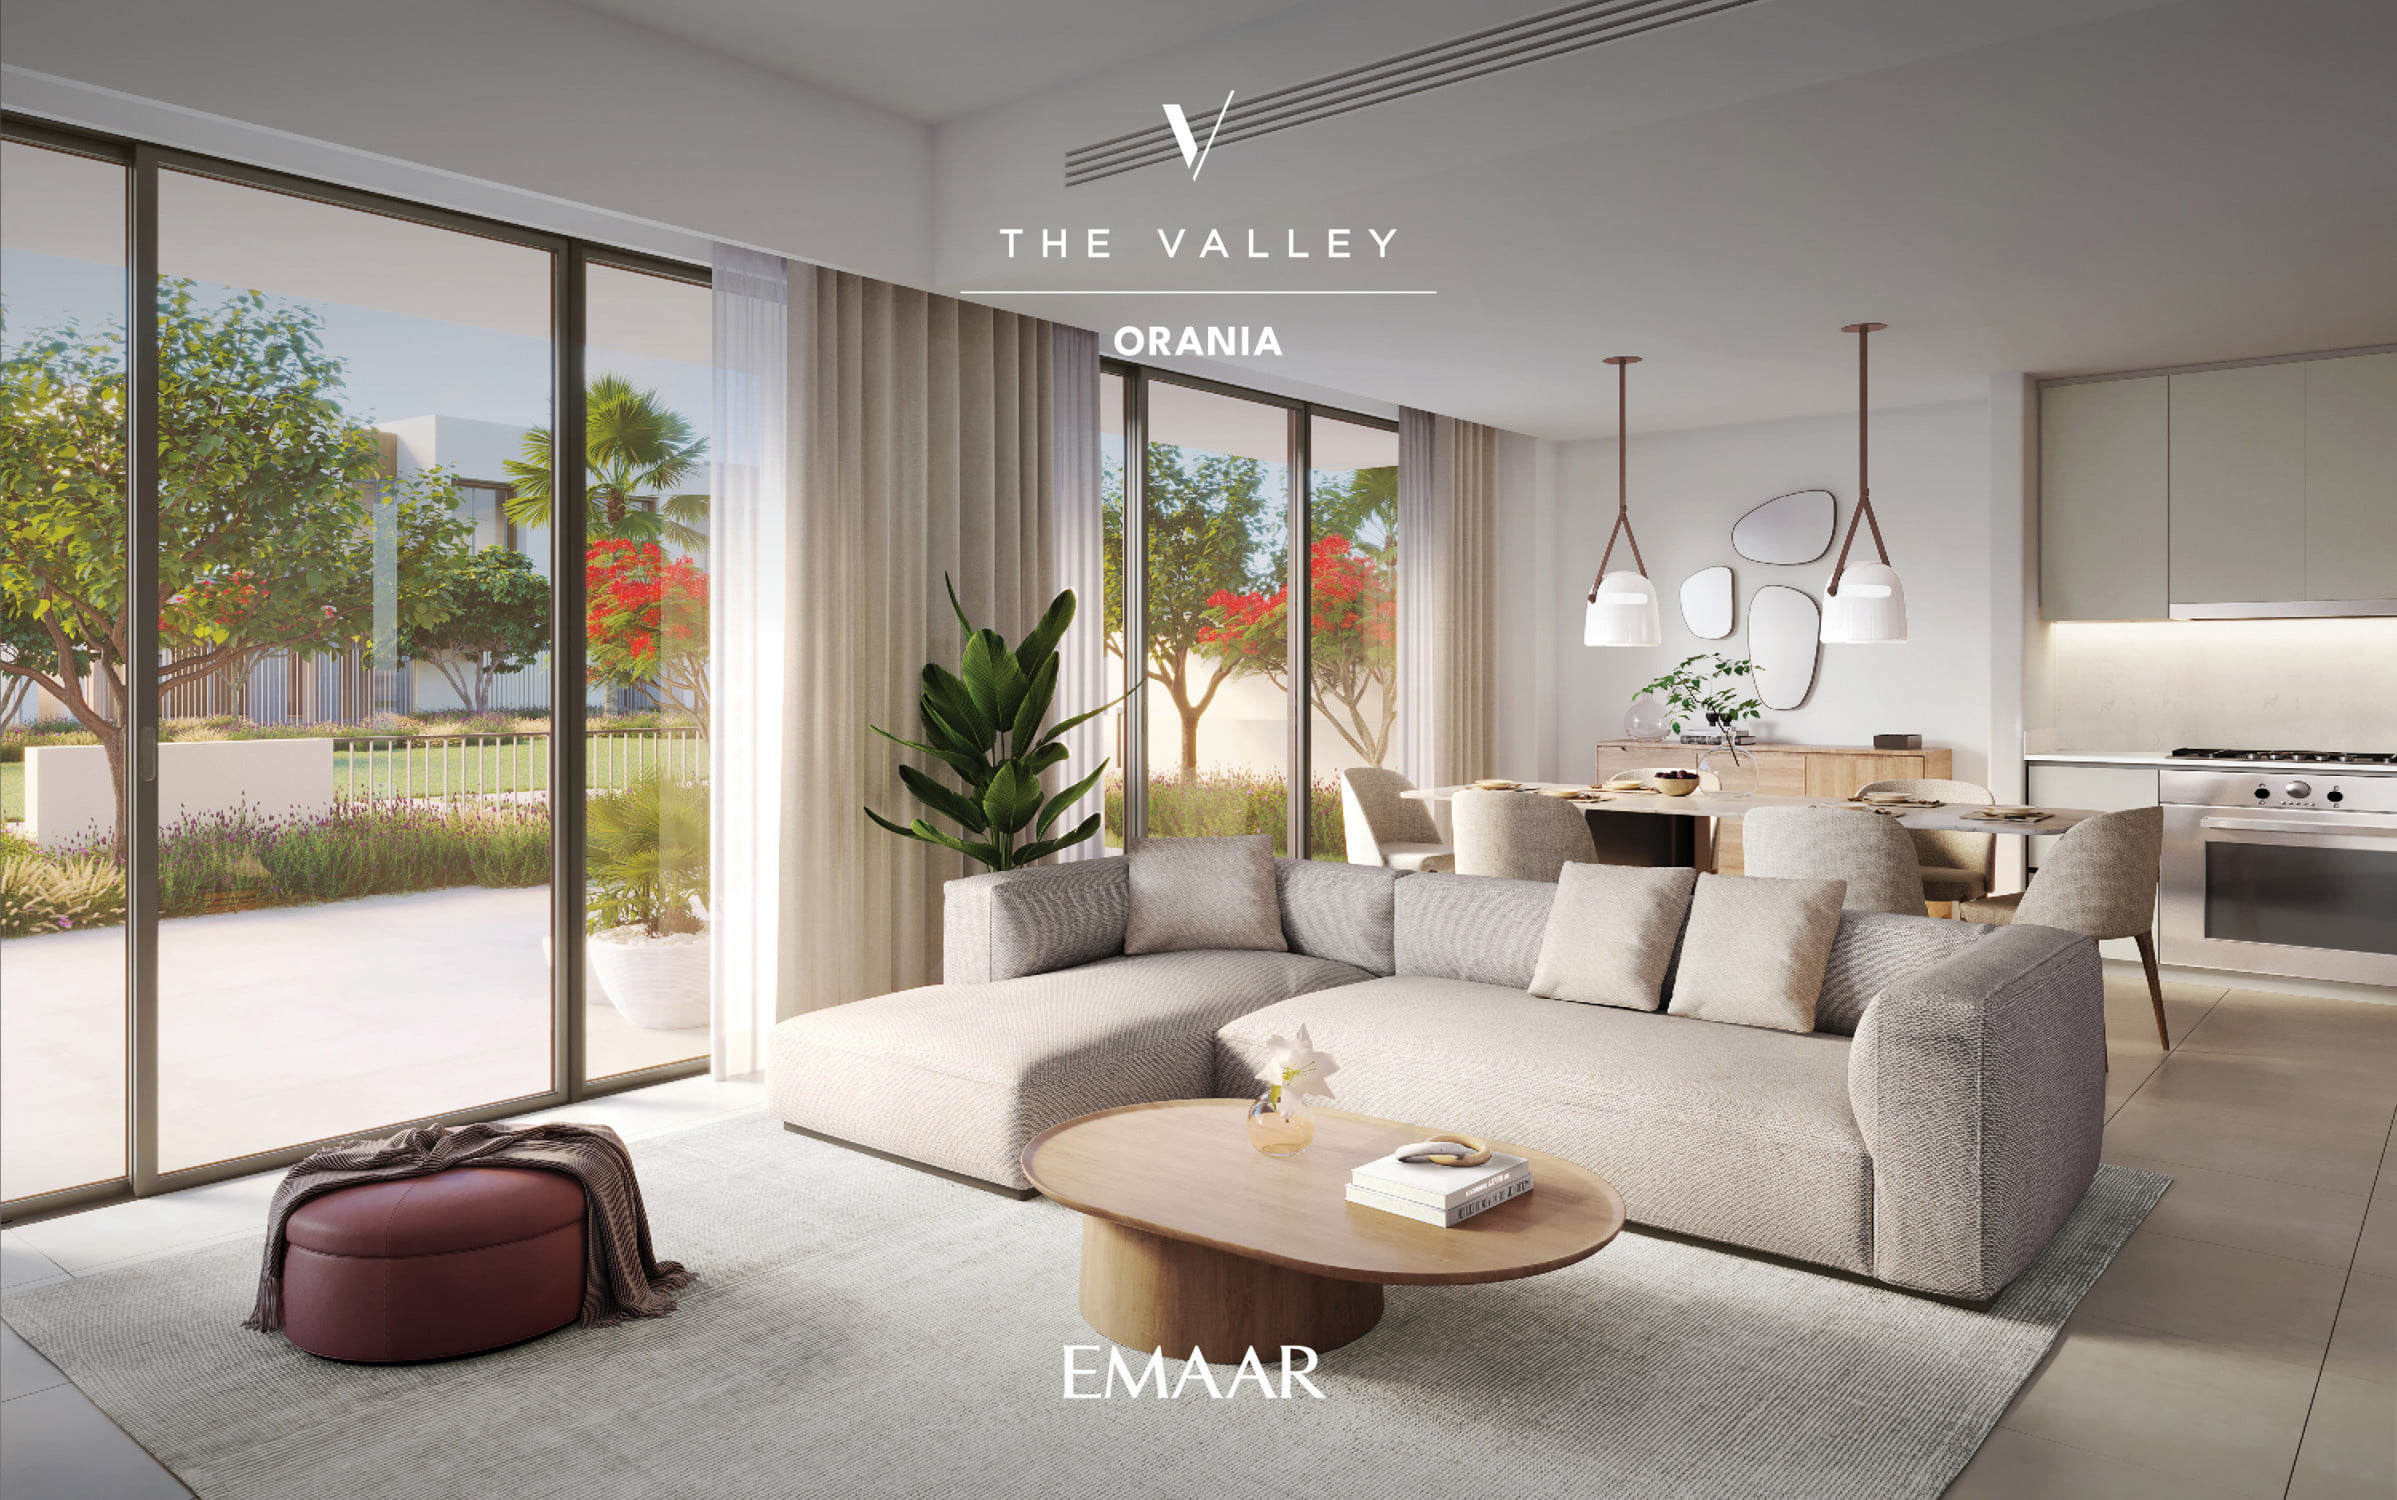 ORANIA THE VALLEY EMAAR 17 - Immobilier Dubai